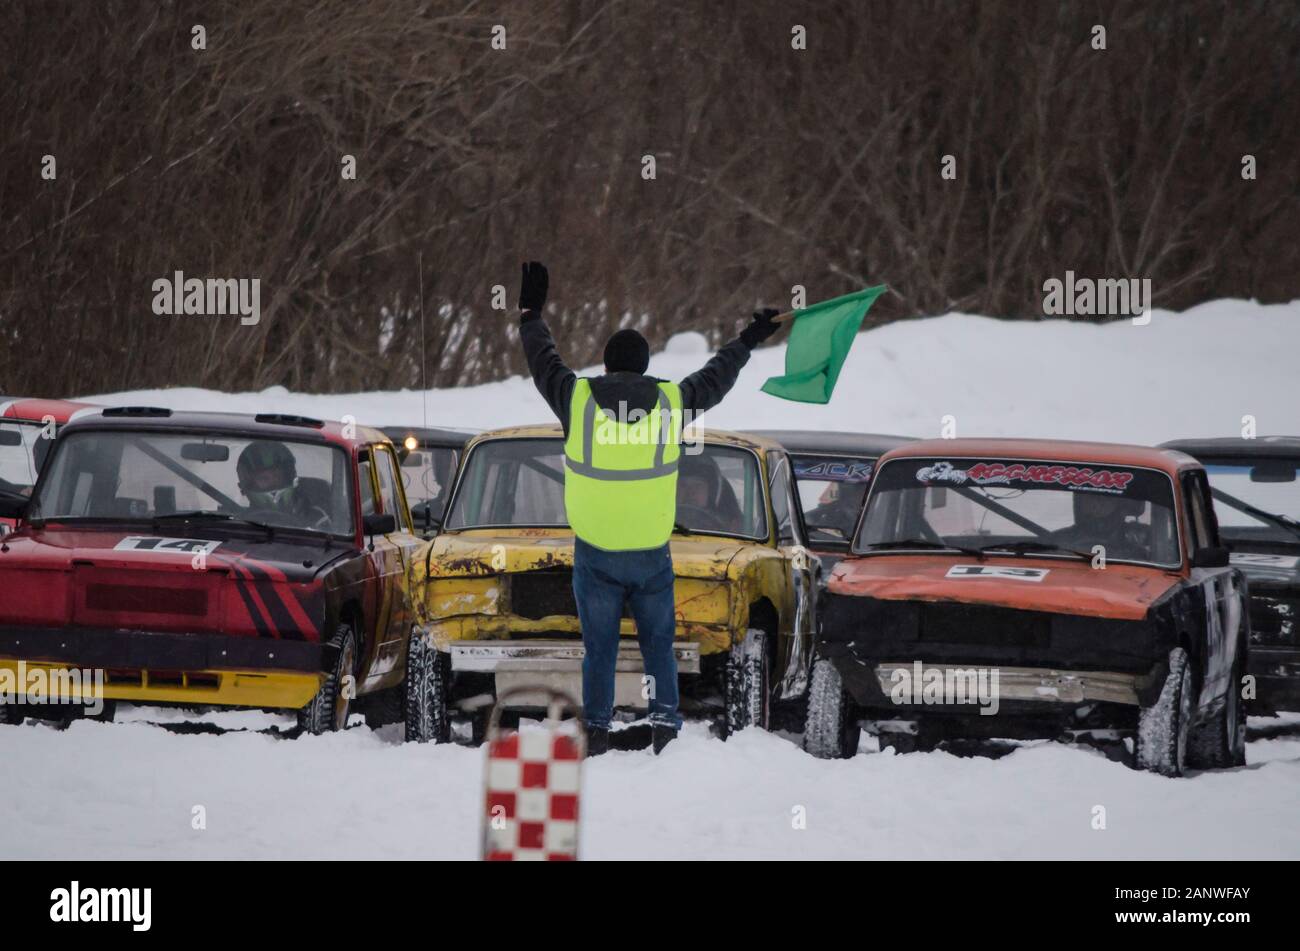 January 2020 - Novodvinsk. Start of the race on the ice track on old Soviet cars. Russia, Arkhangelsk region Stock Photo